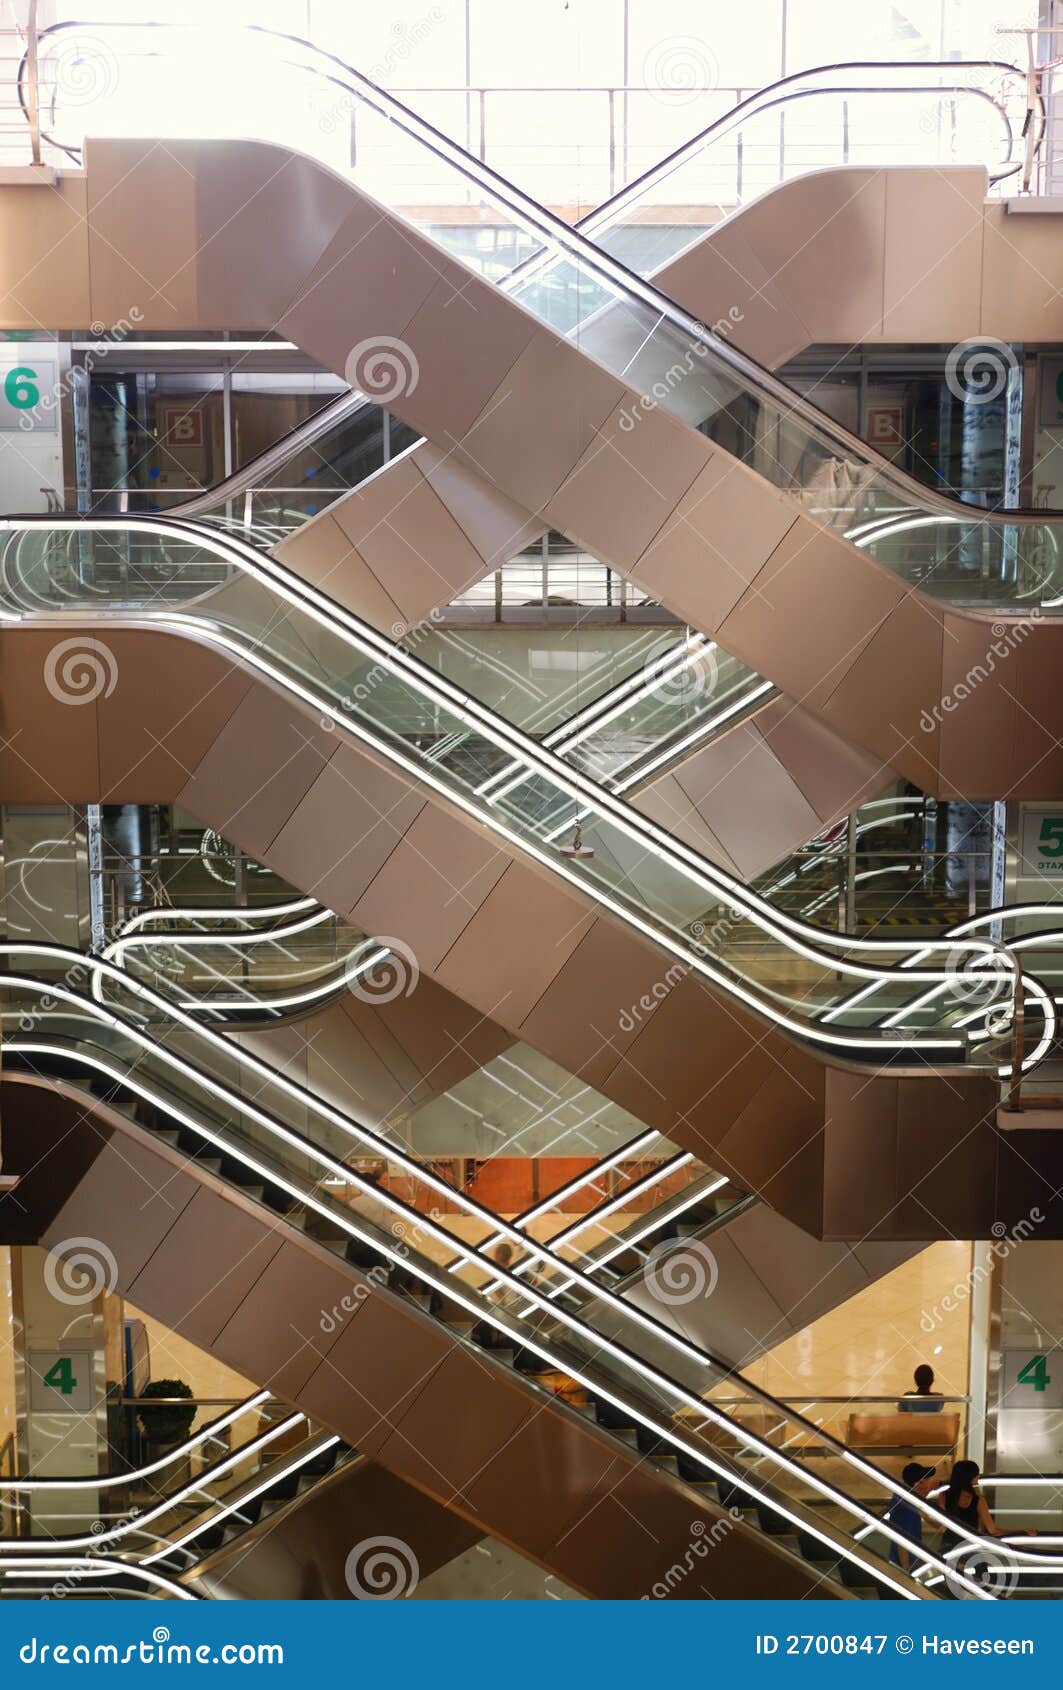 Escalators at the mall stock image. Image of urban, people - 2700847